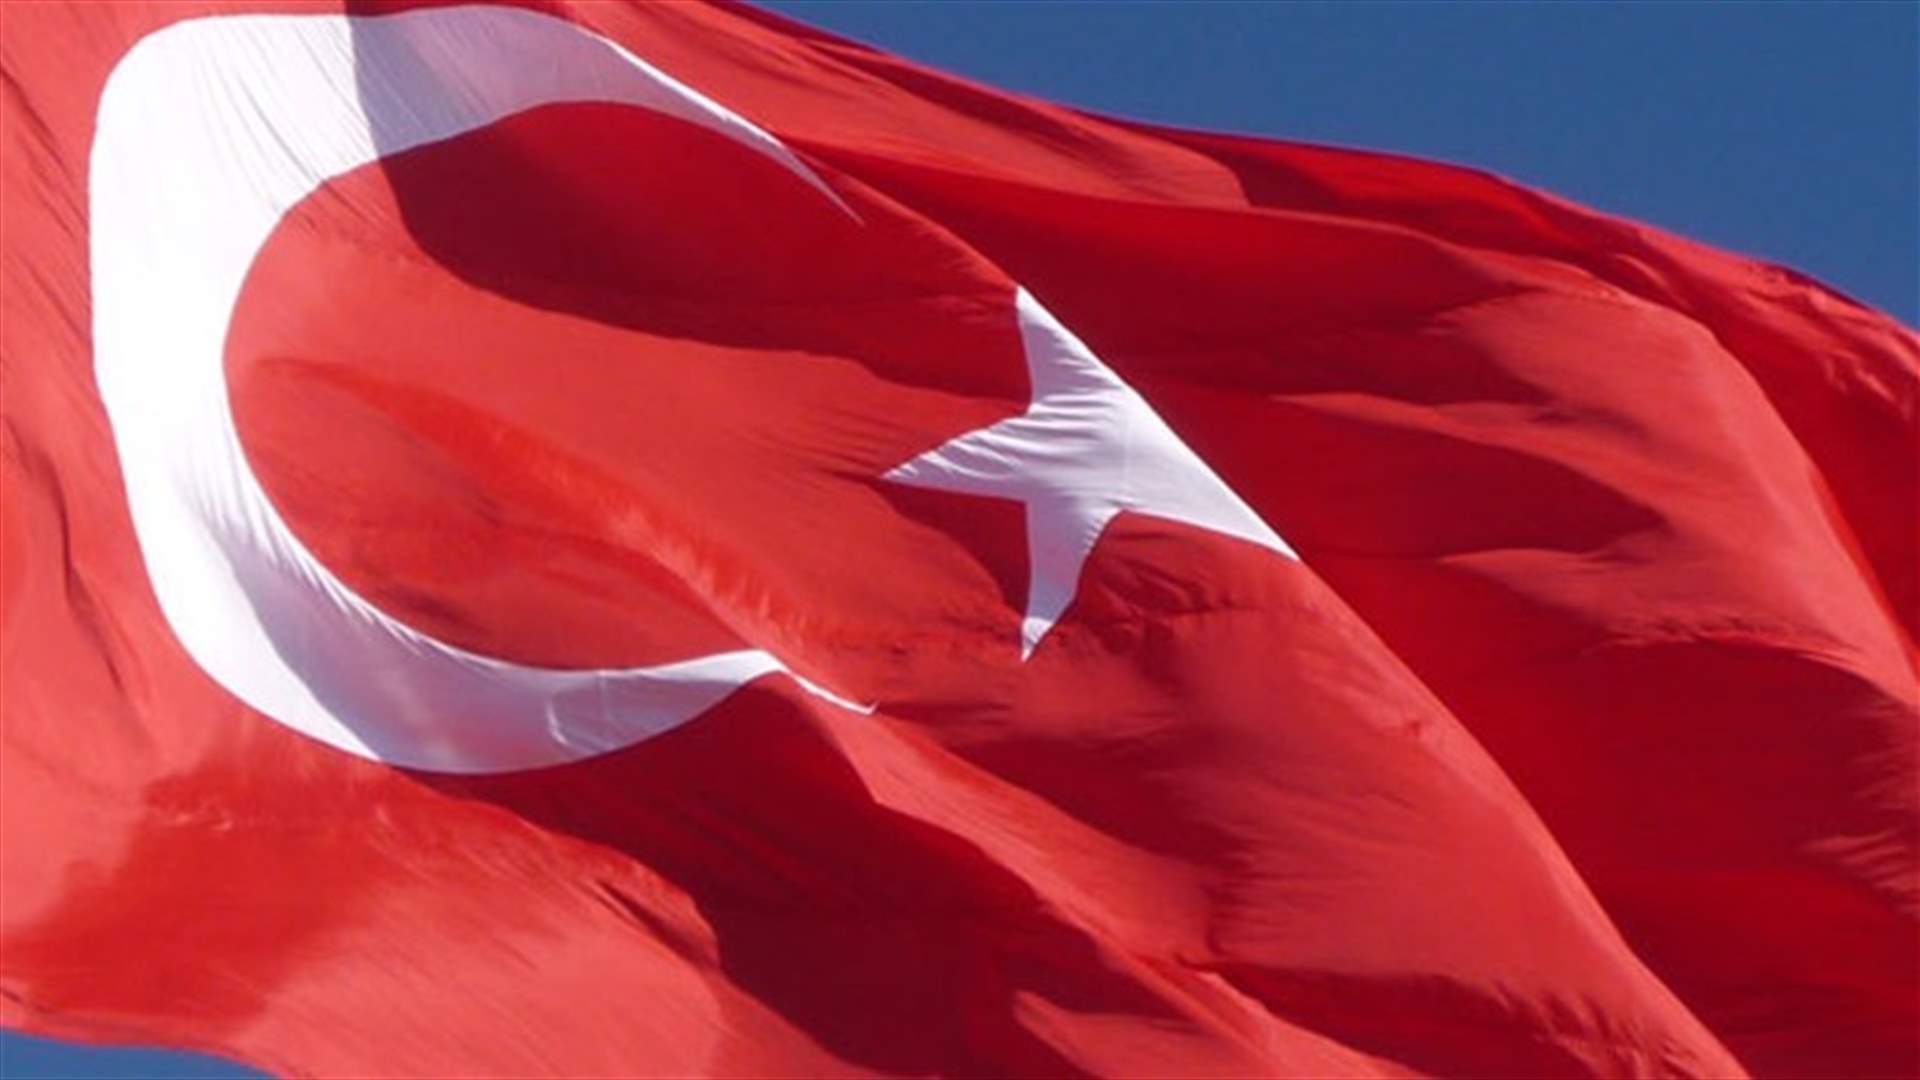 Turkey dismisses almost 28,000 teachers over terrorism links - deputy PM